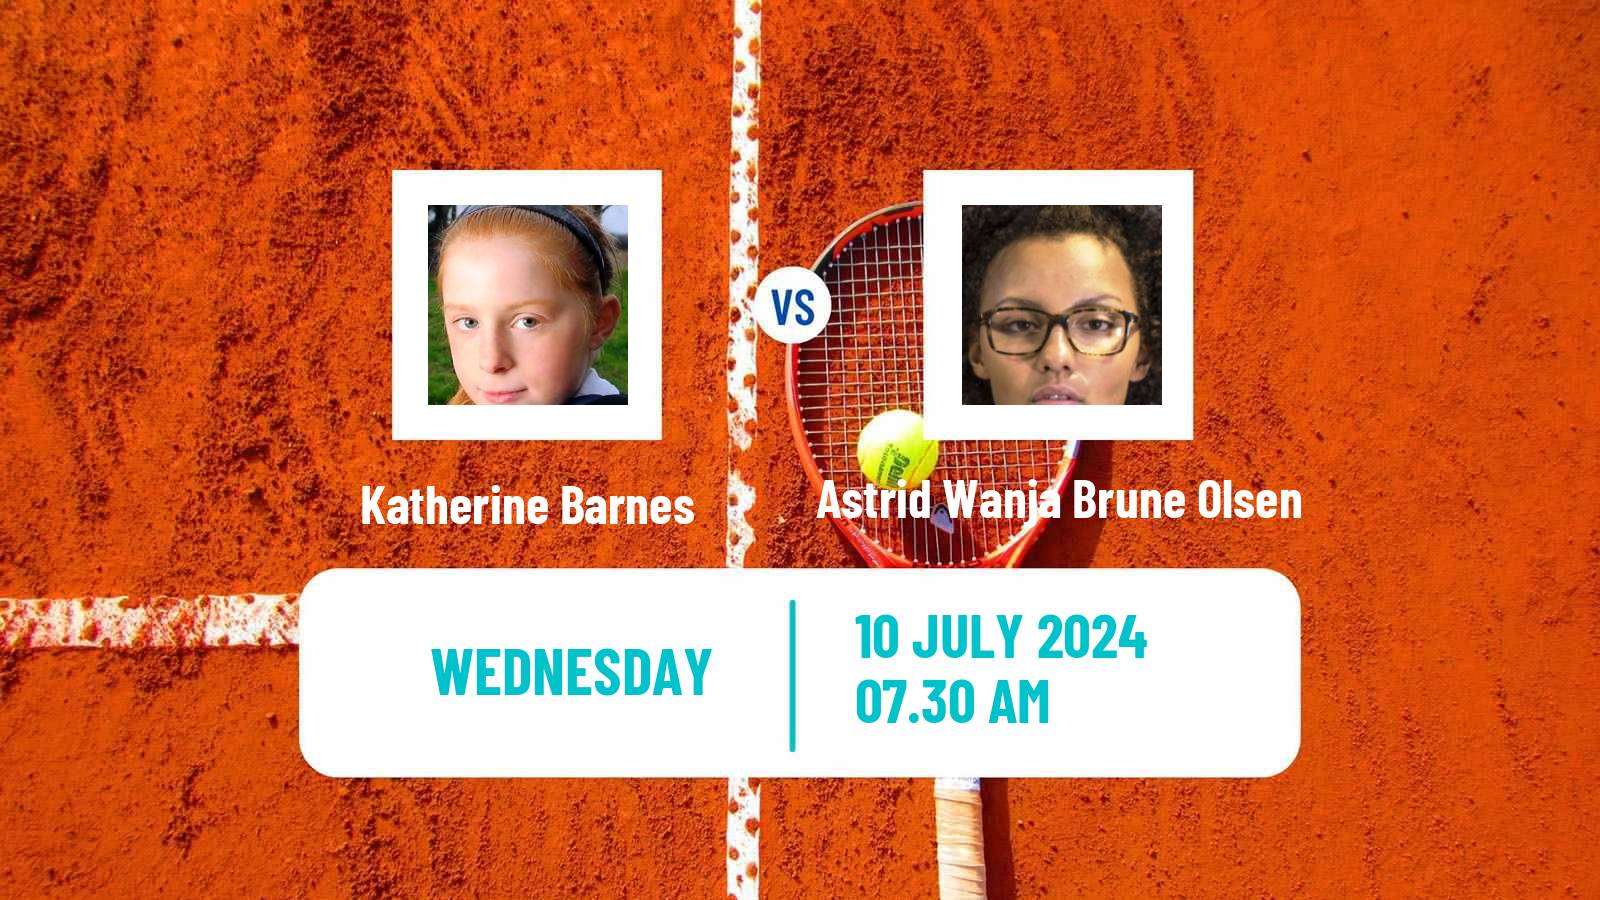 Tennis ITF W15 Grodzisk Mazowiecki Women Katherine Barnes - Astrid Wanja Brune Olsen